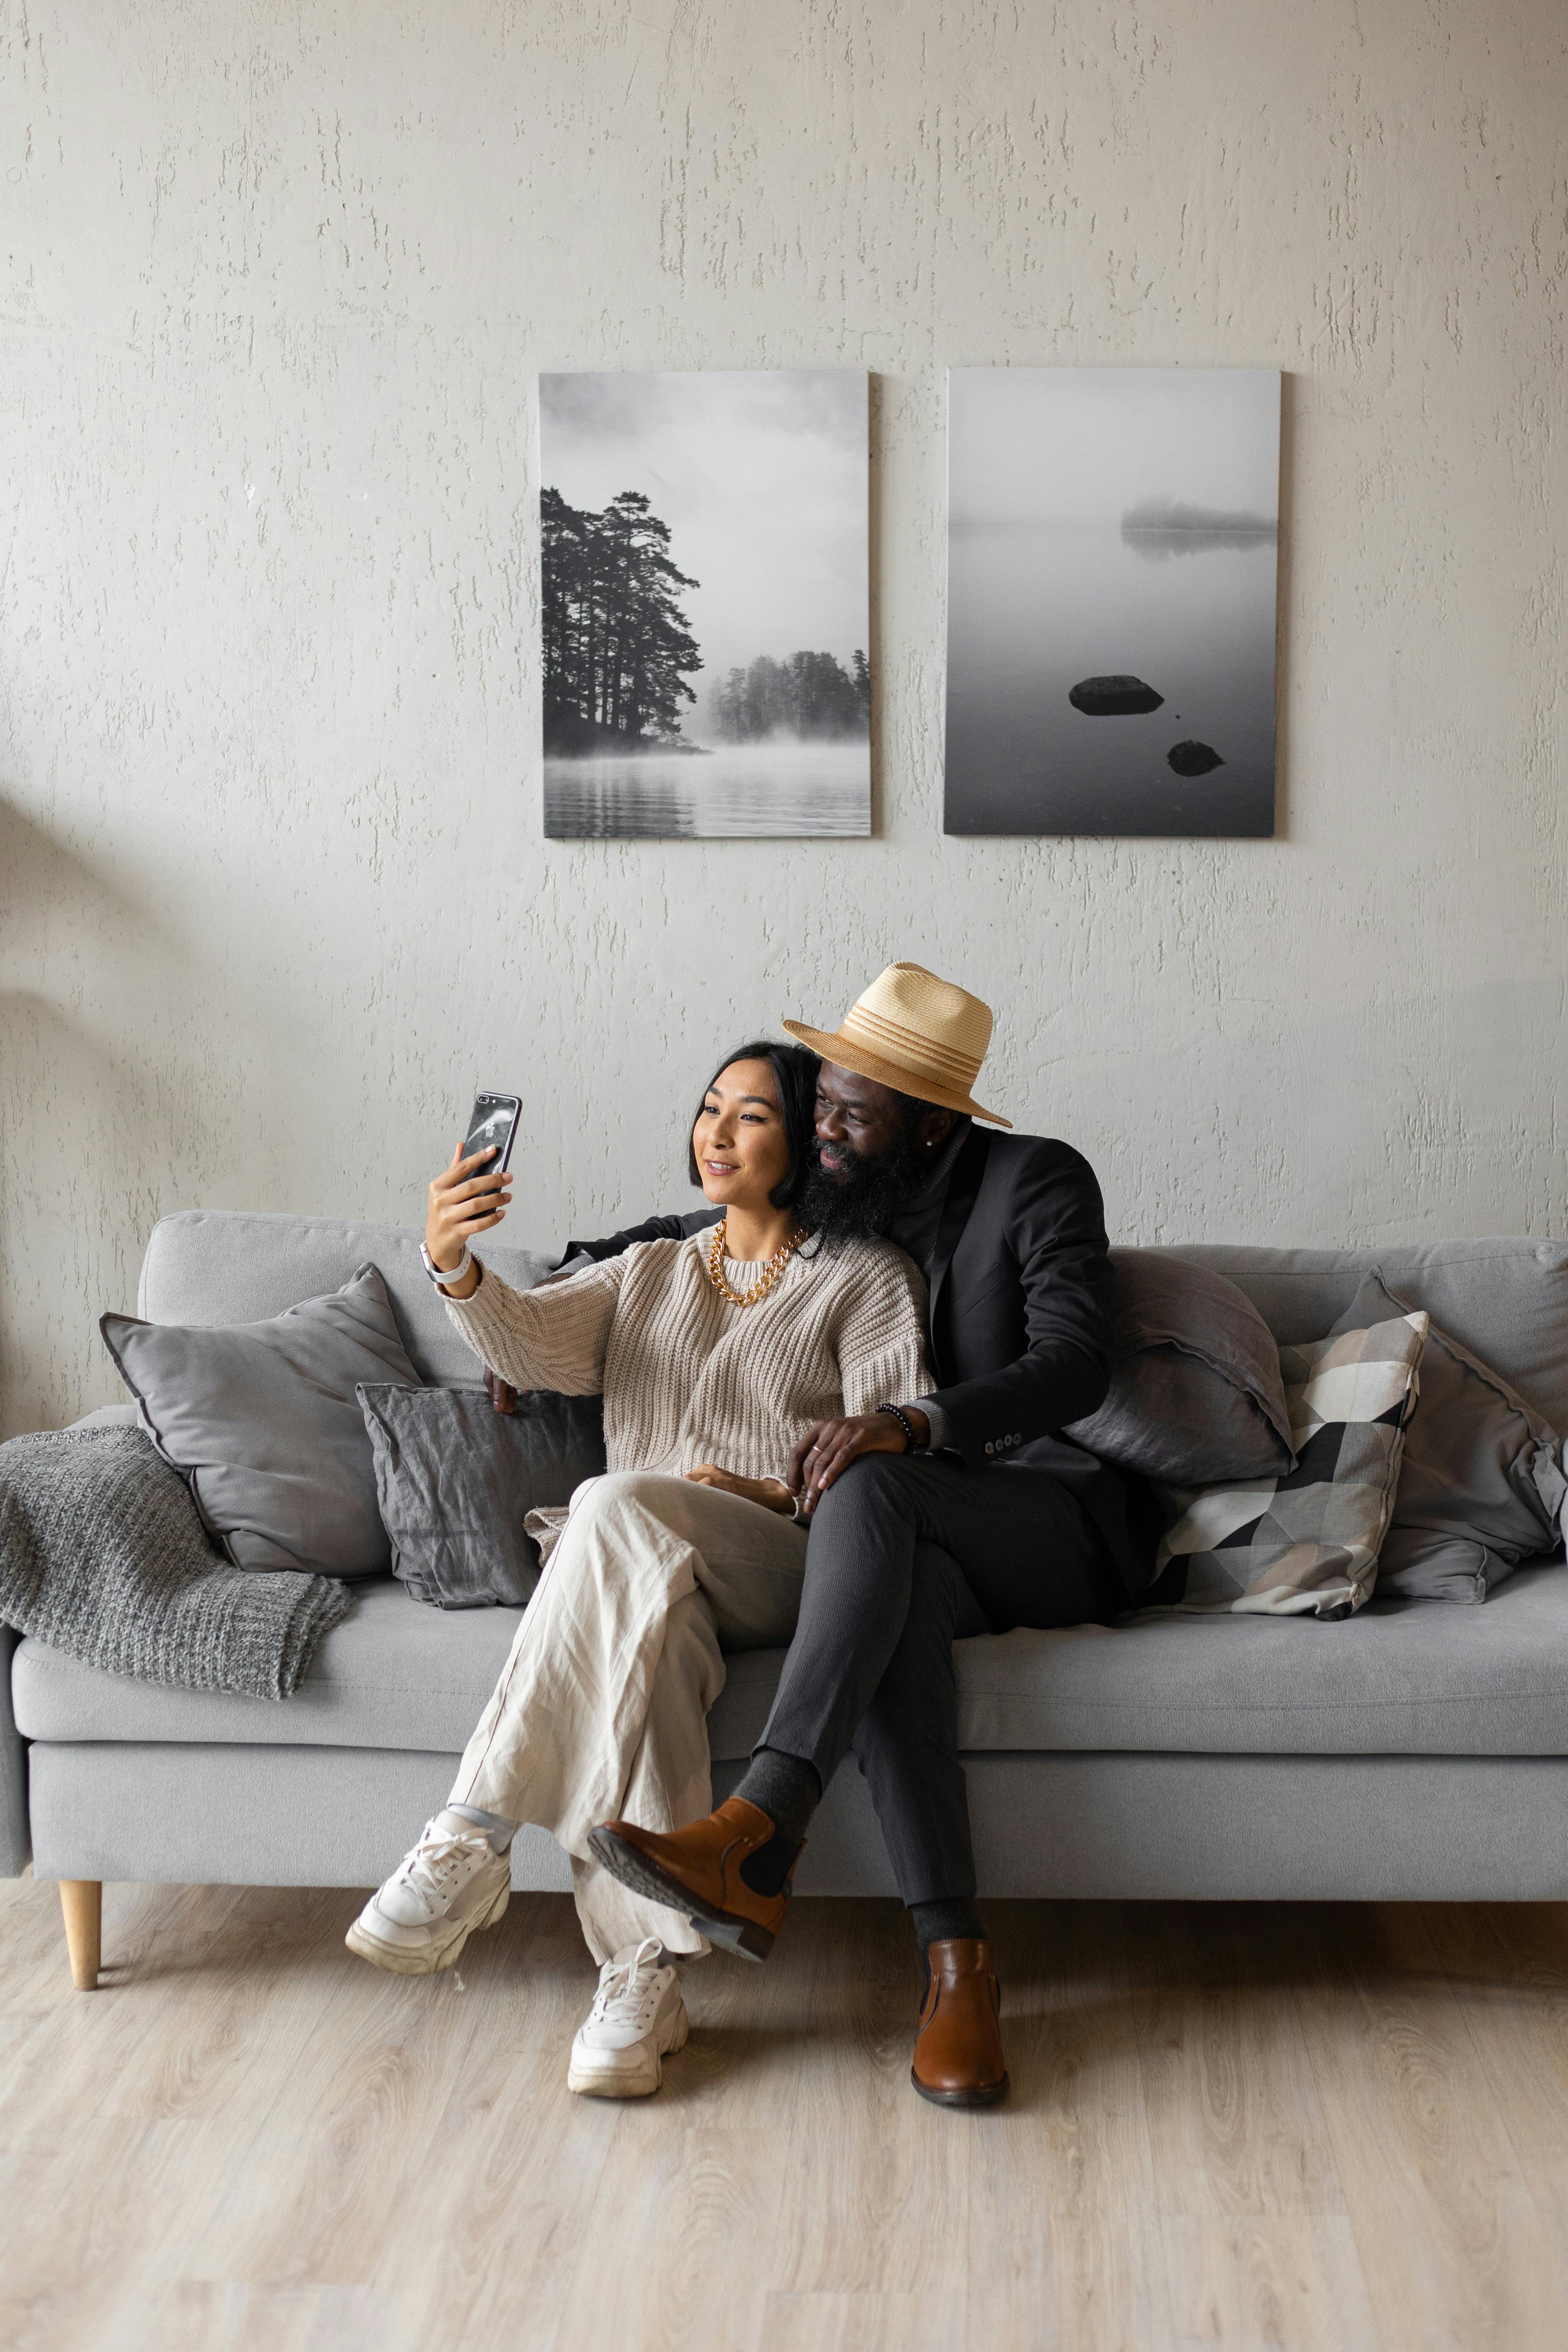 multiethnic couple having online conversation via smartphone